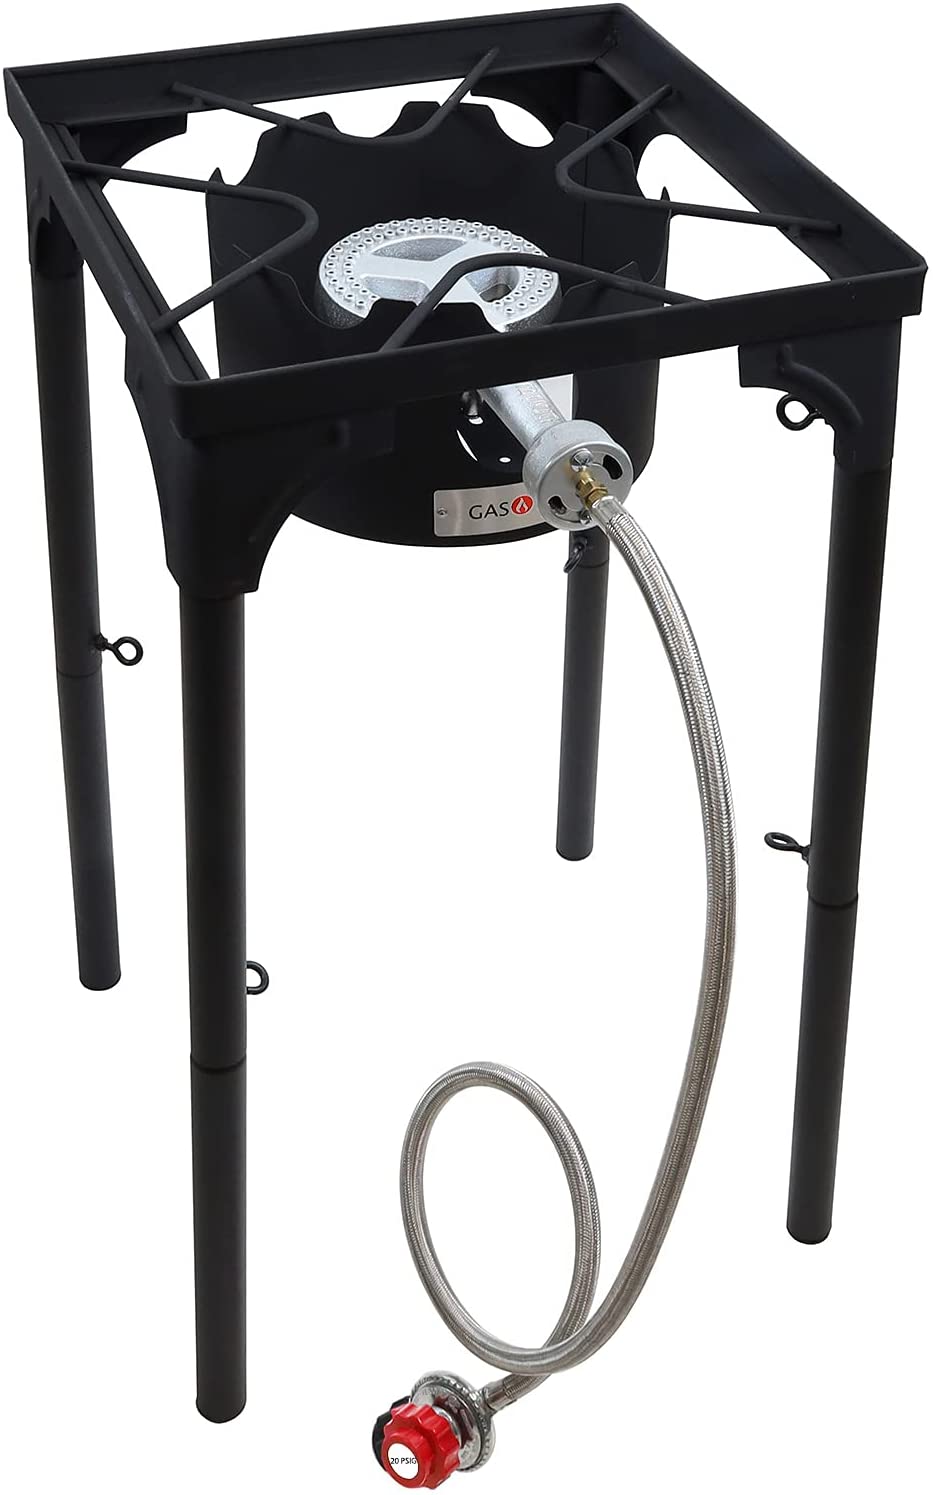 Best outdoor wok burner portable gas one with steel braided hose and pressure regulator